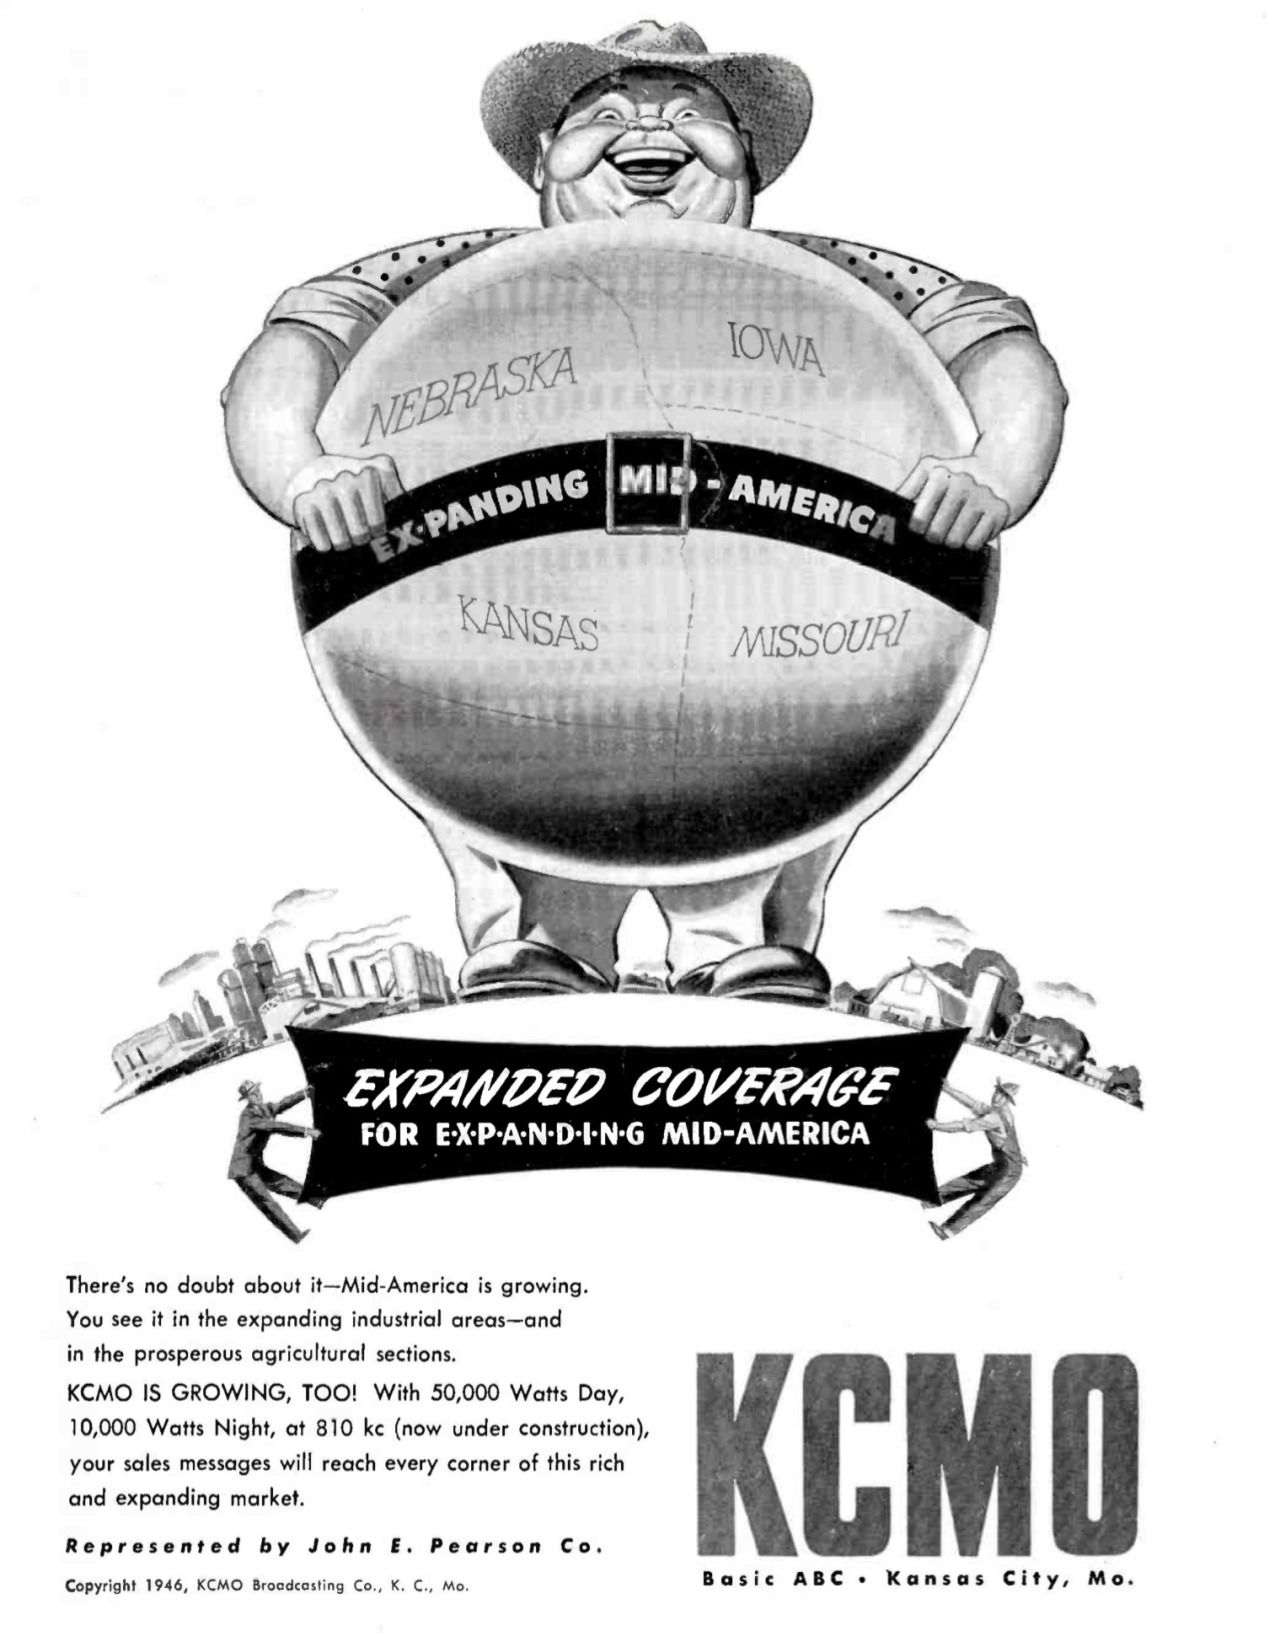 KCMO-AM - Kansas City, Missouri U.S.A. - 1947